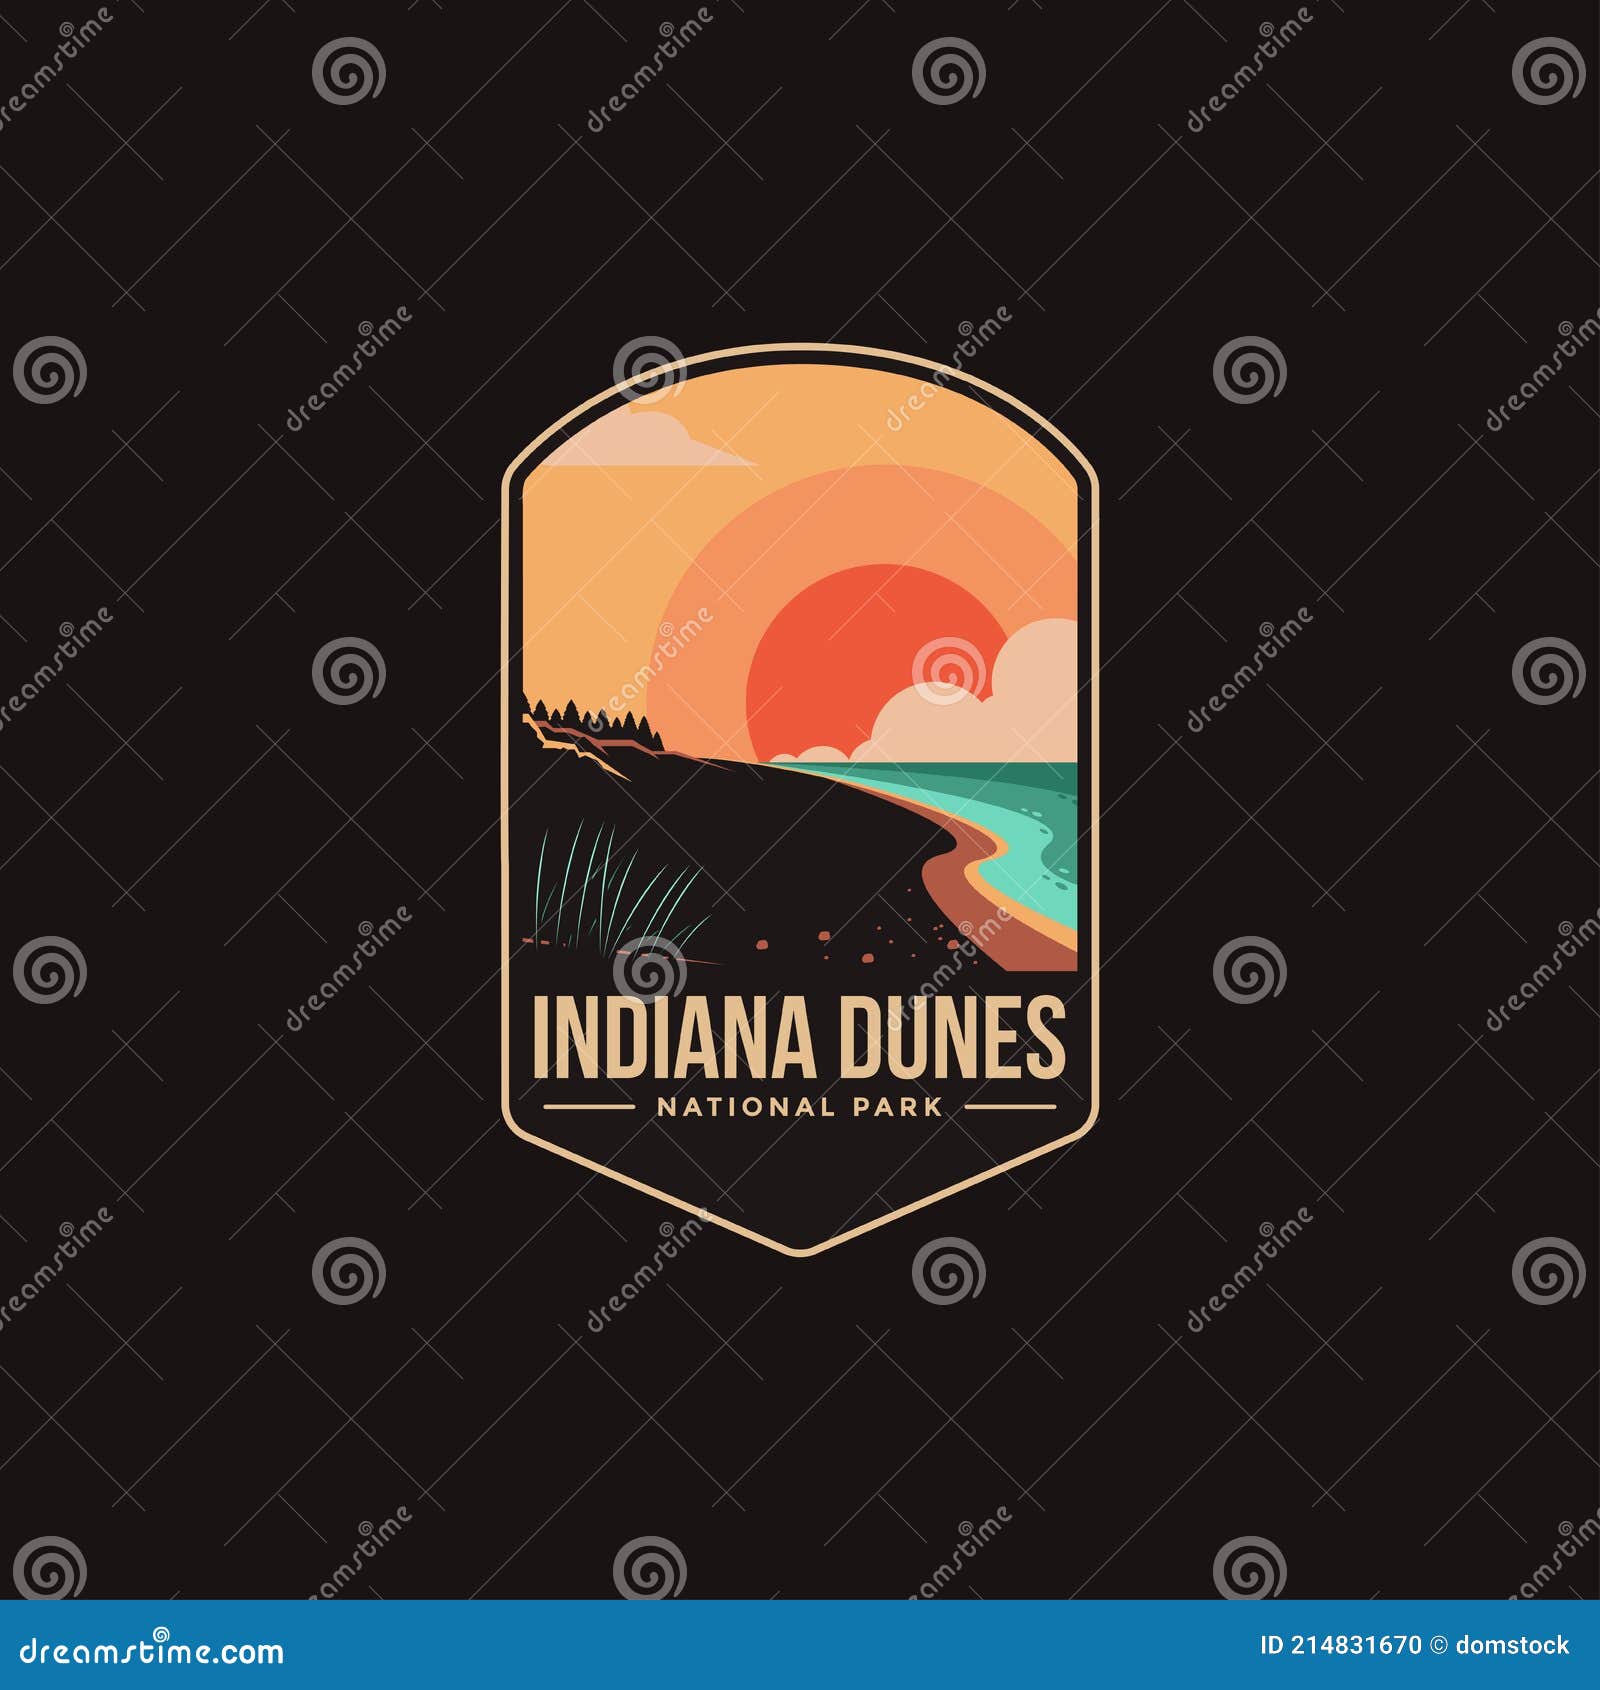 emblem patch logo  of indiana dunes national park